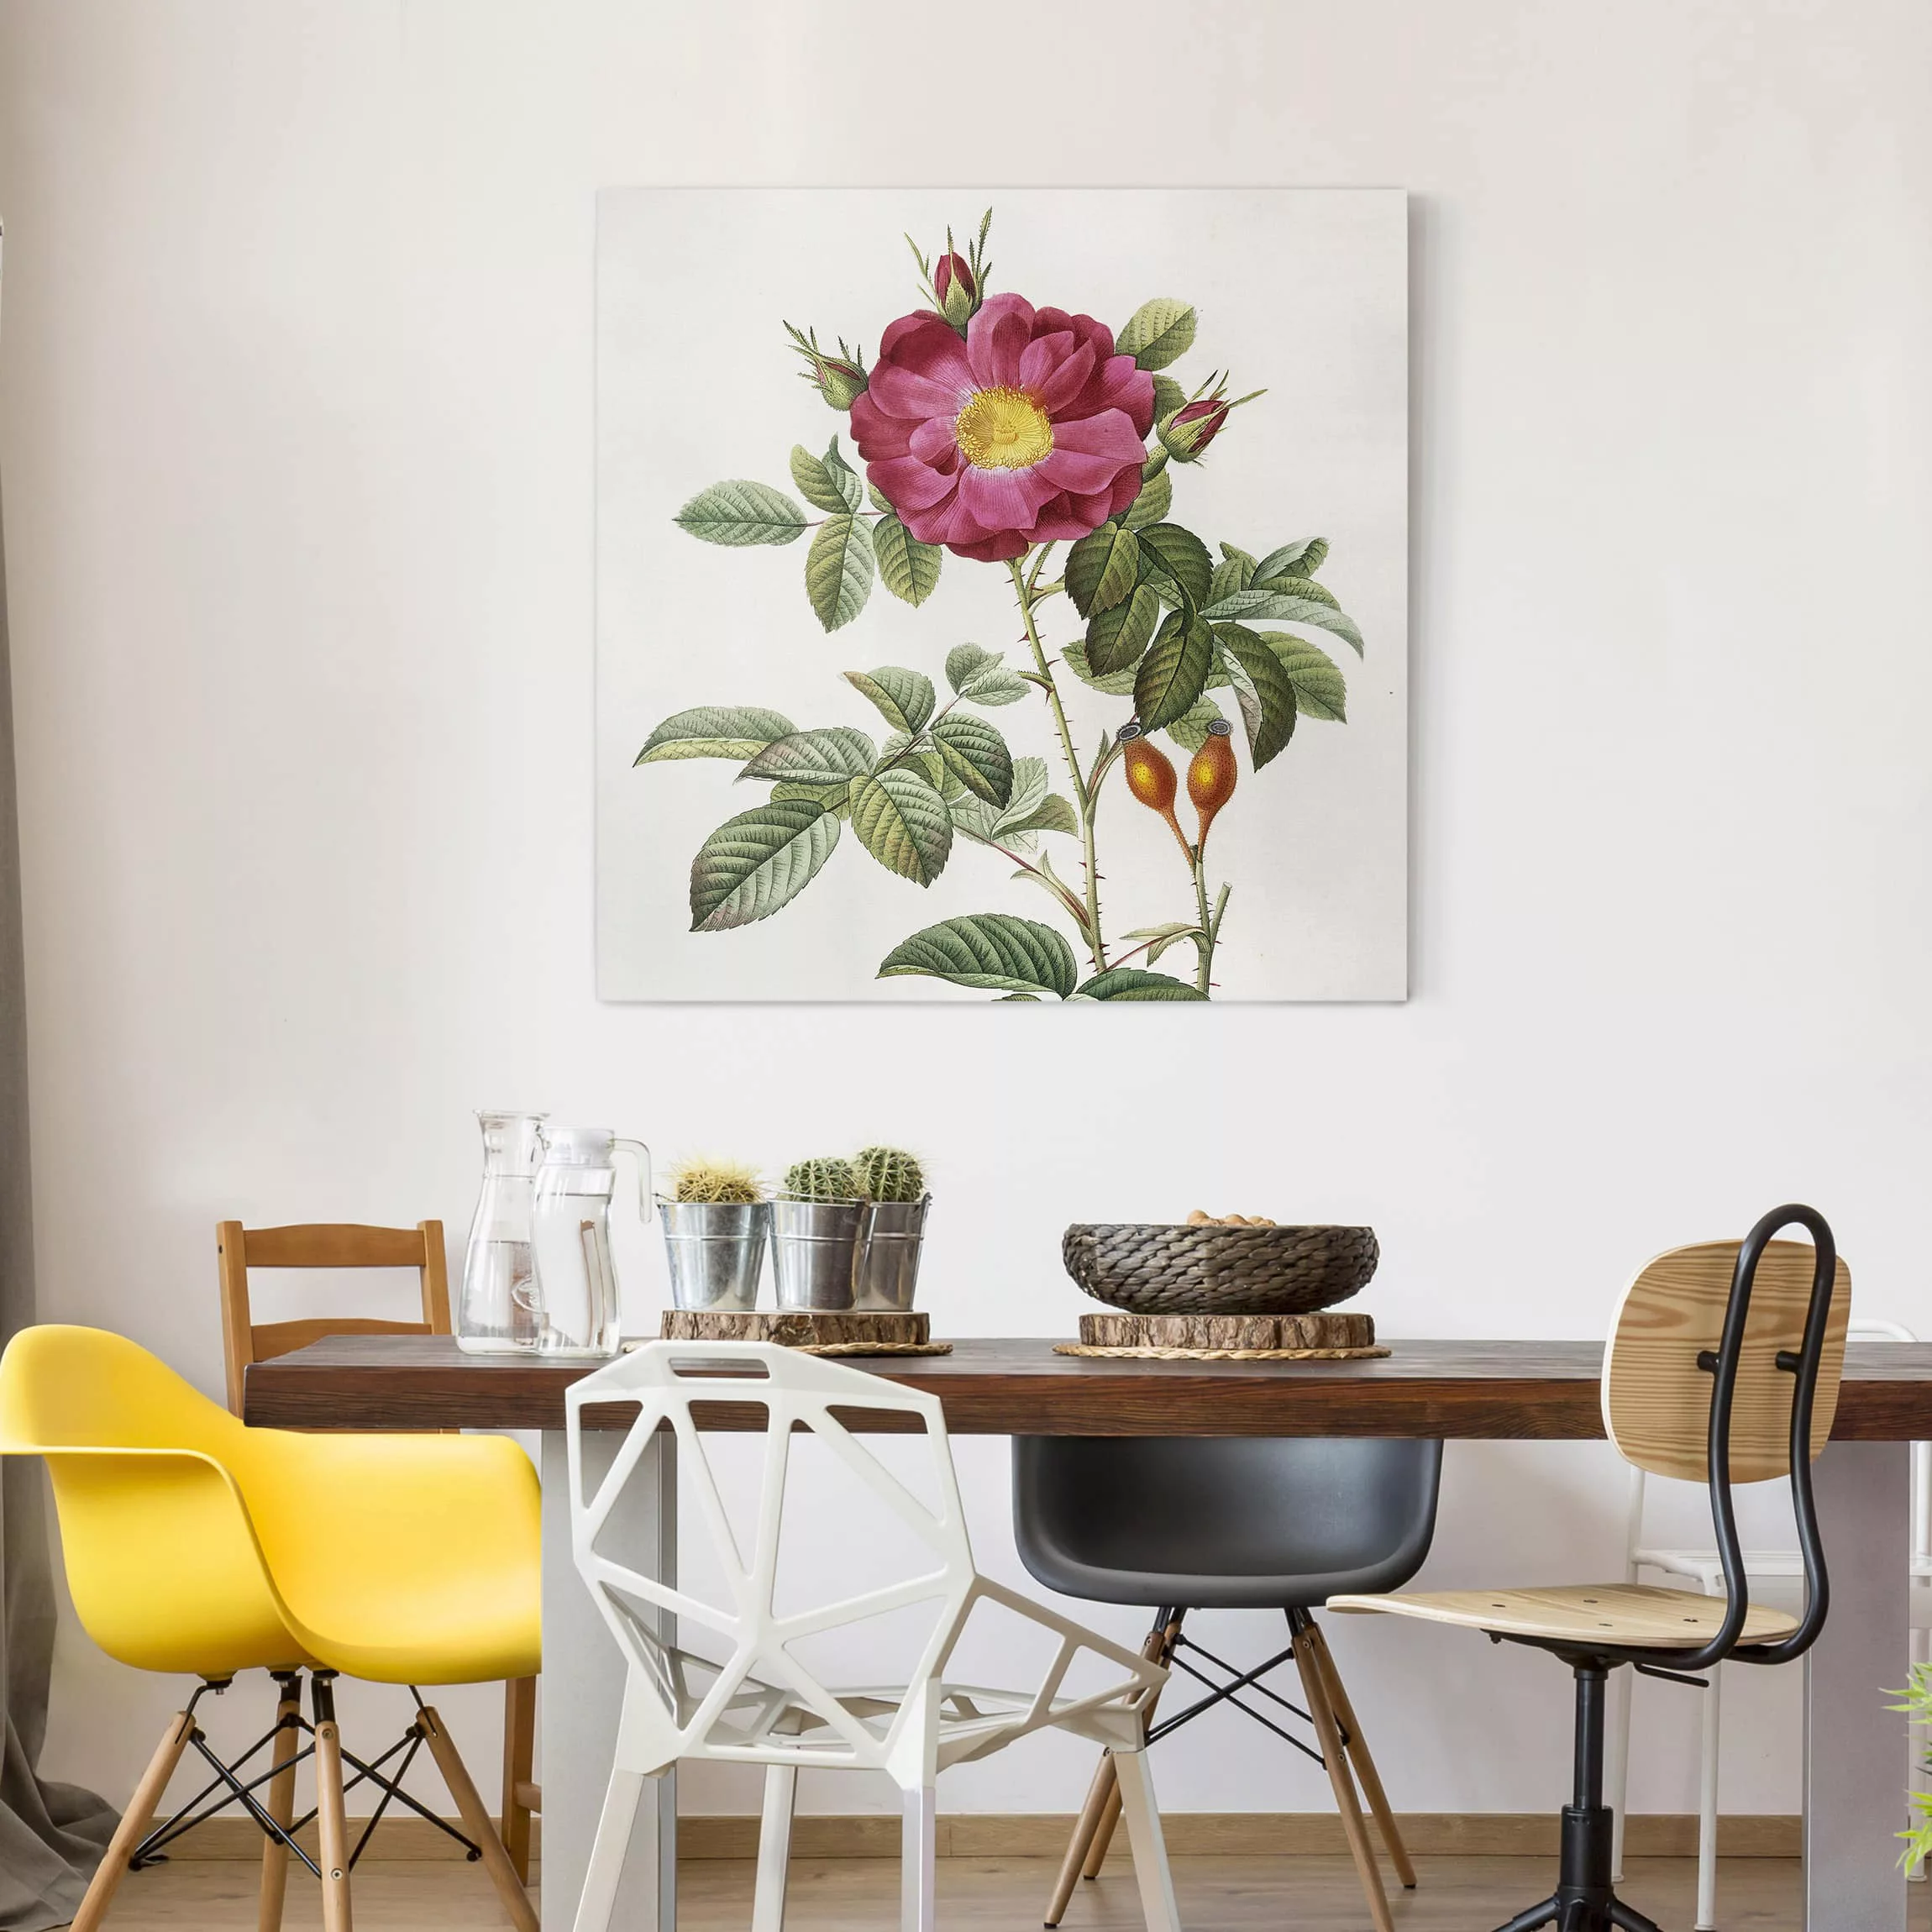 Leinwandbild Blumen - Quadrat Pierre Joseph Redouté - Portland-Rose günstig online kaufen